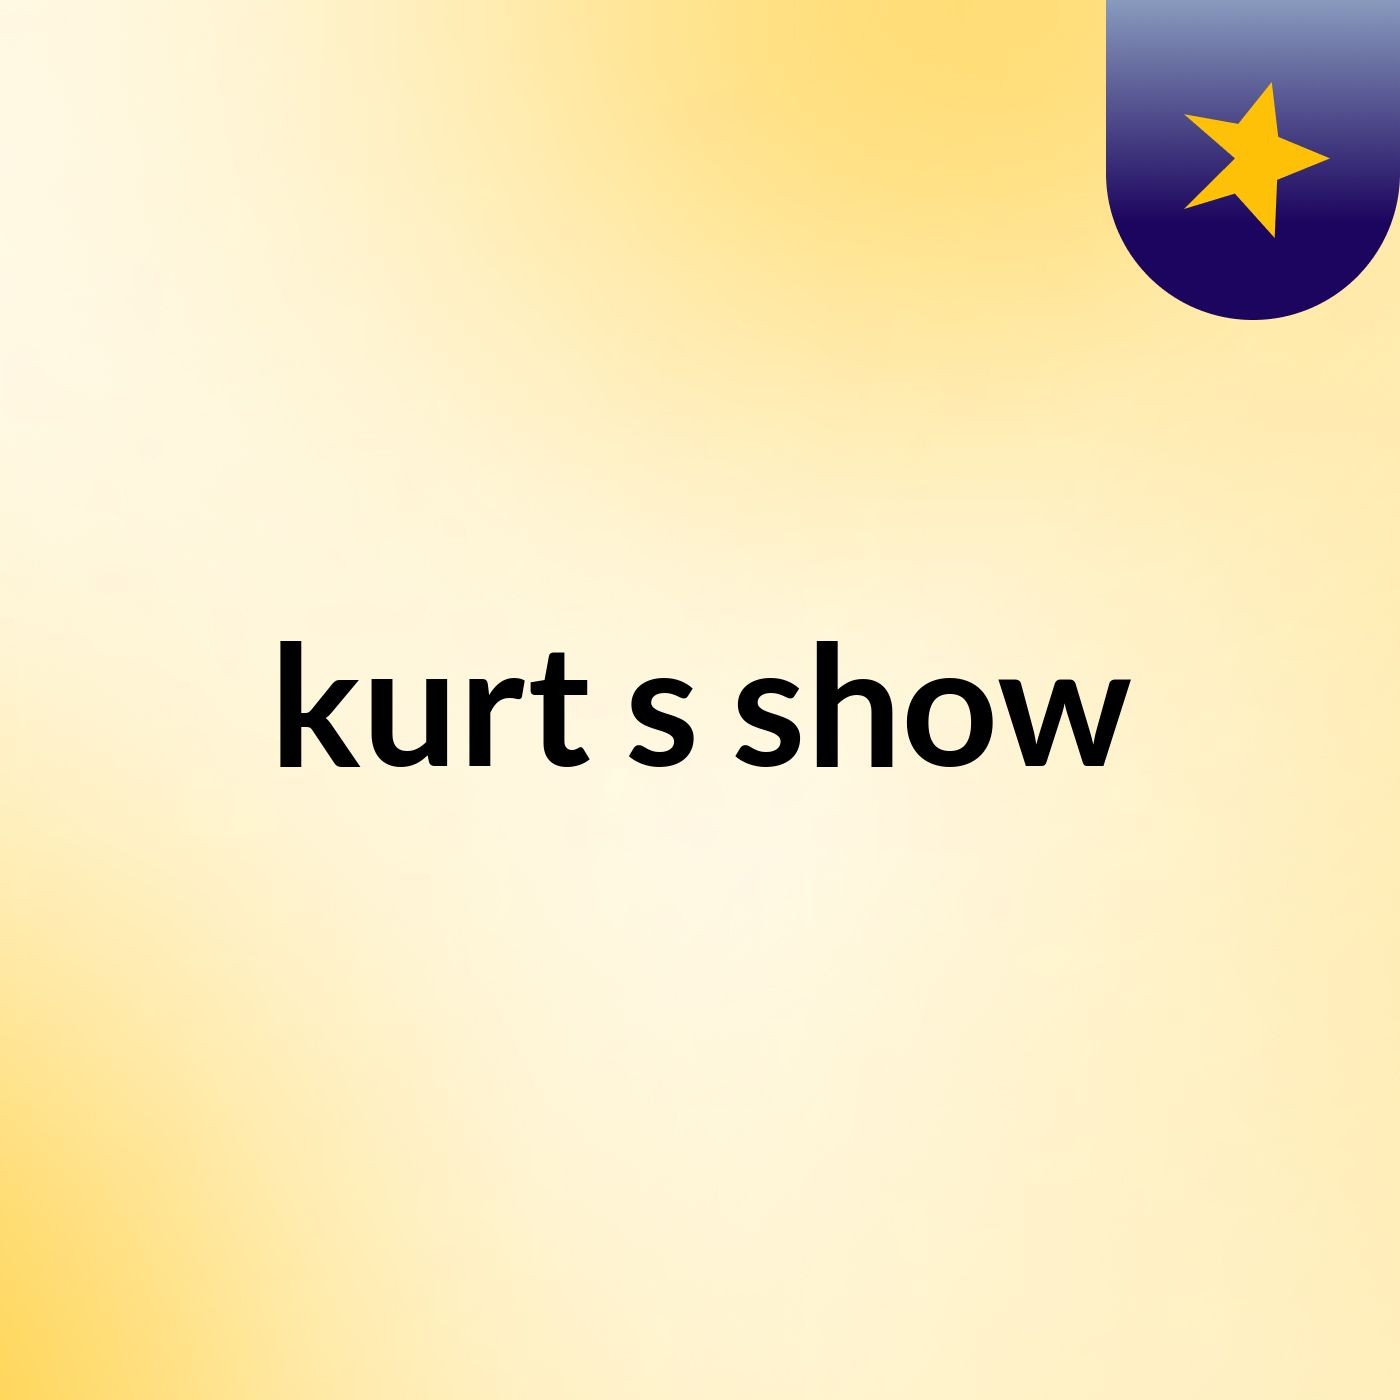 kurt's show